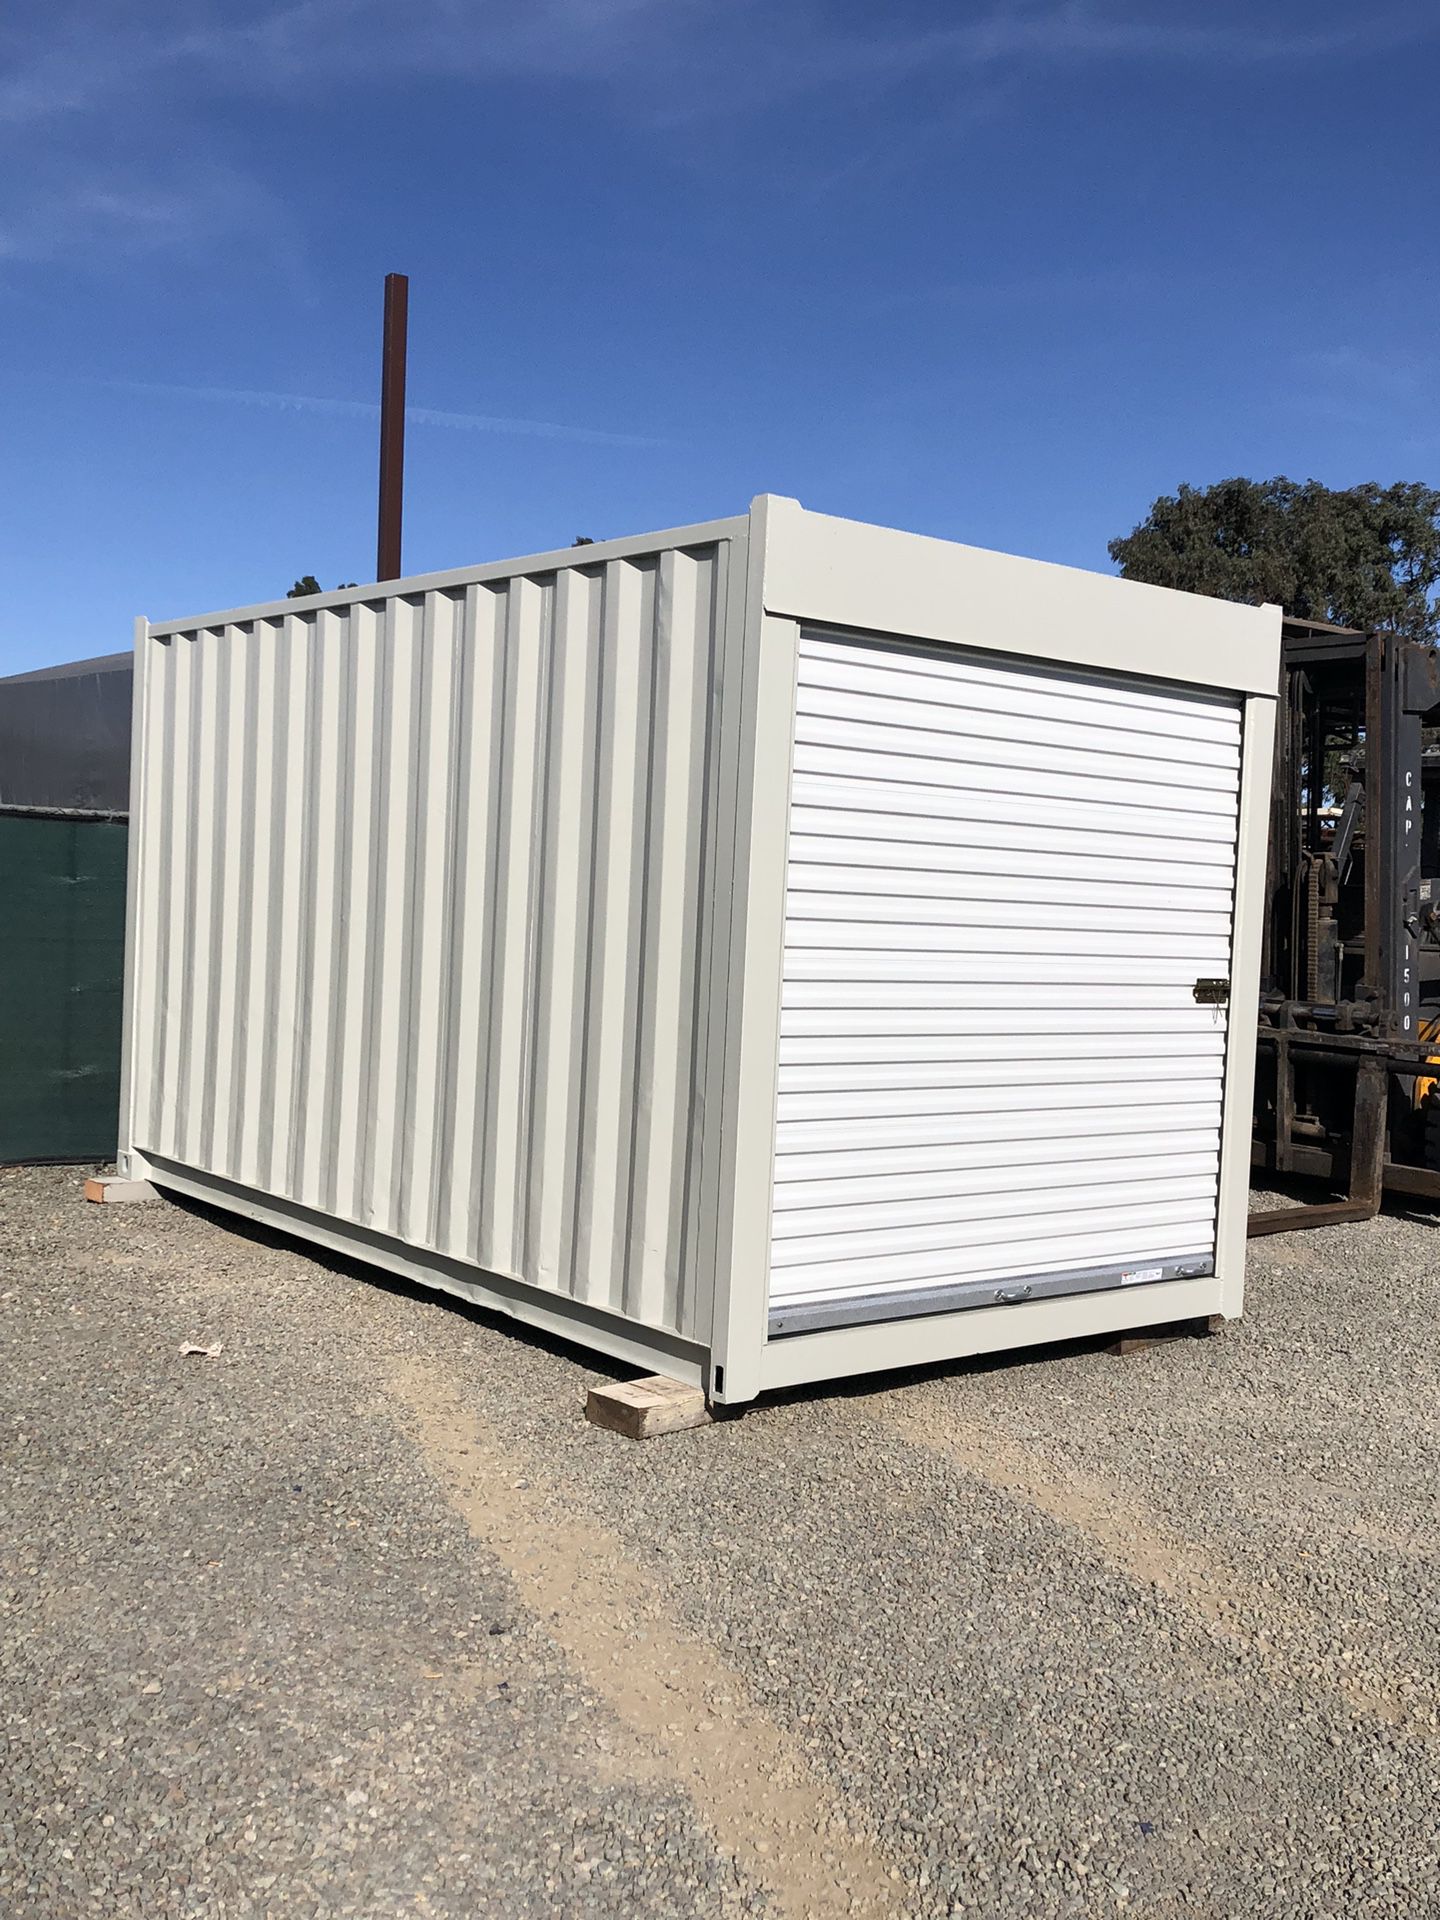 15' "Like New" Refurbished Storage Container